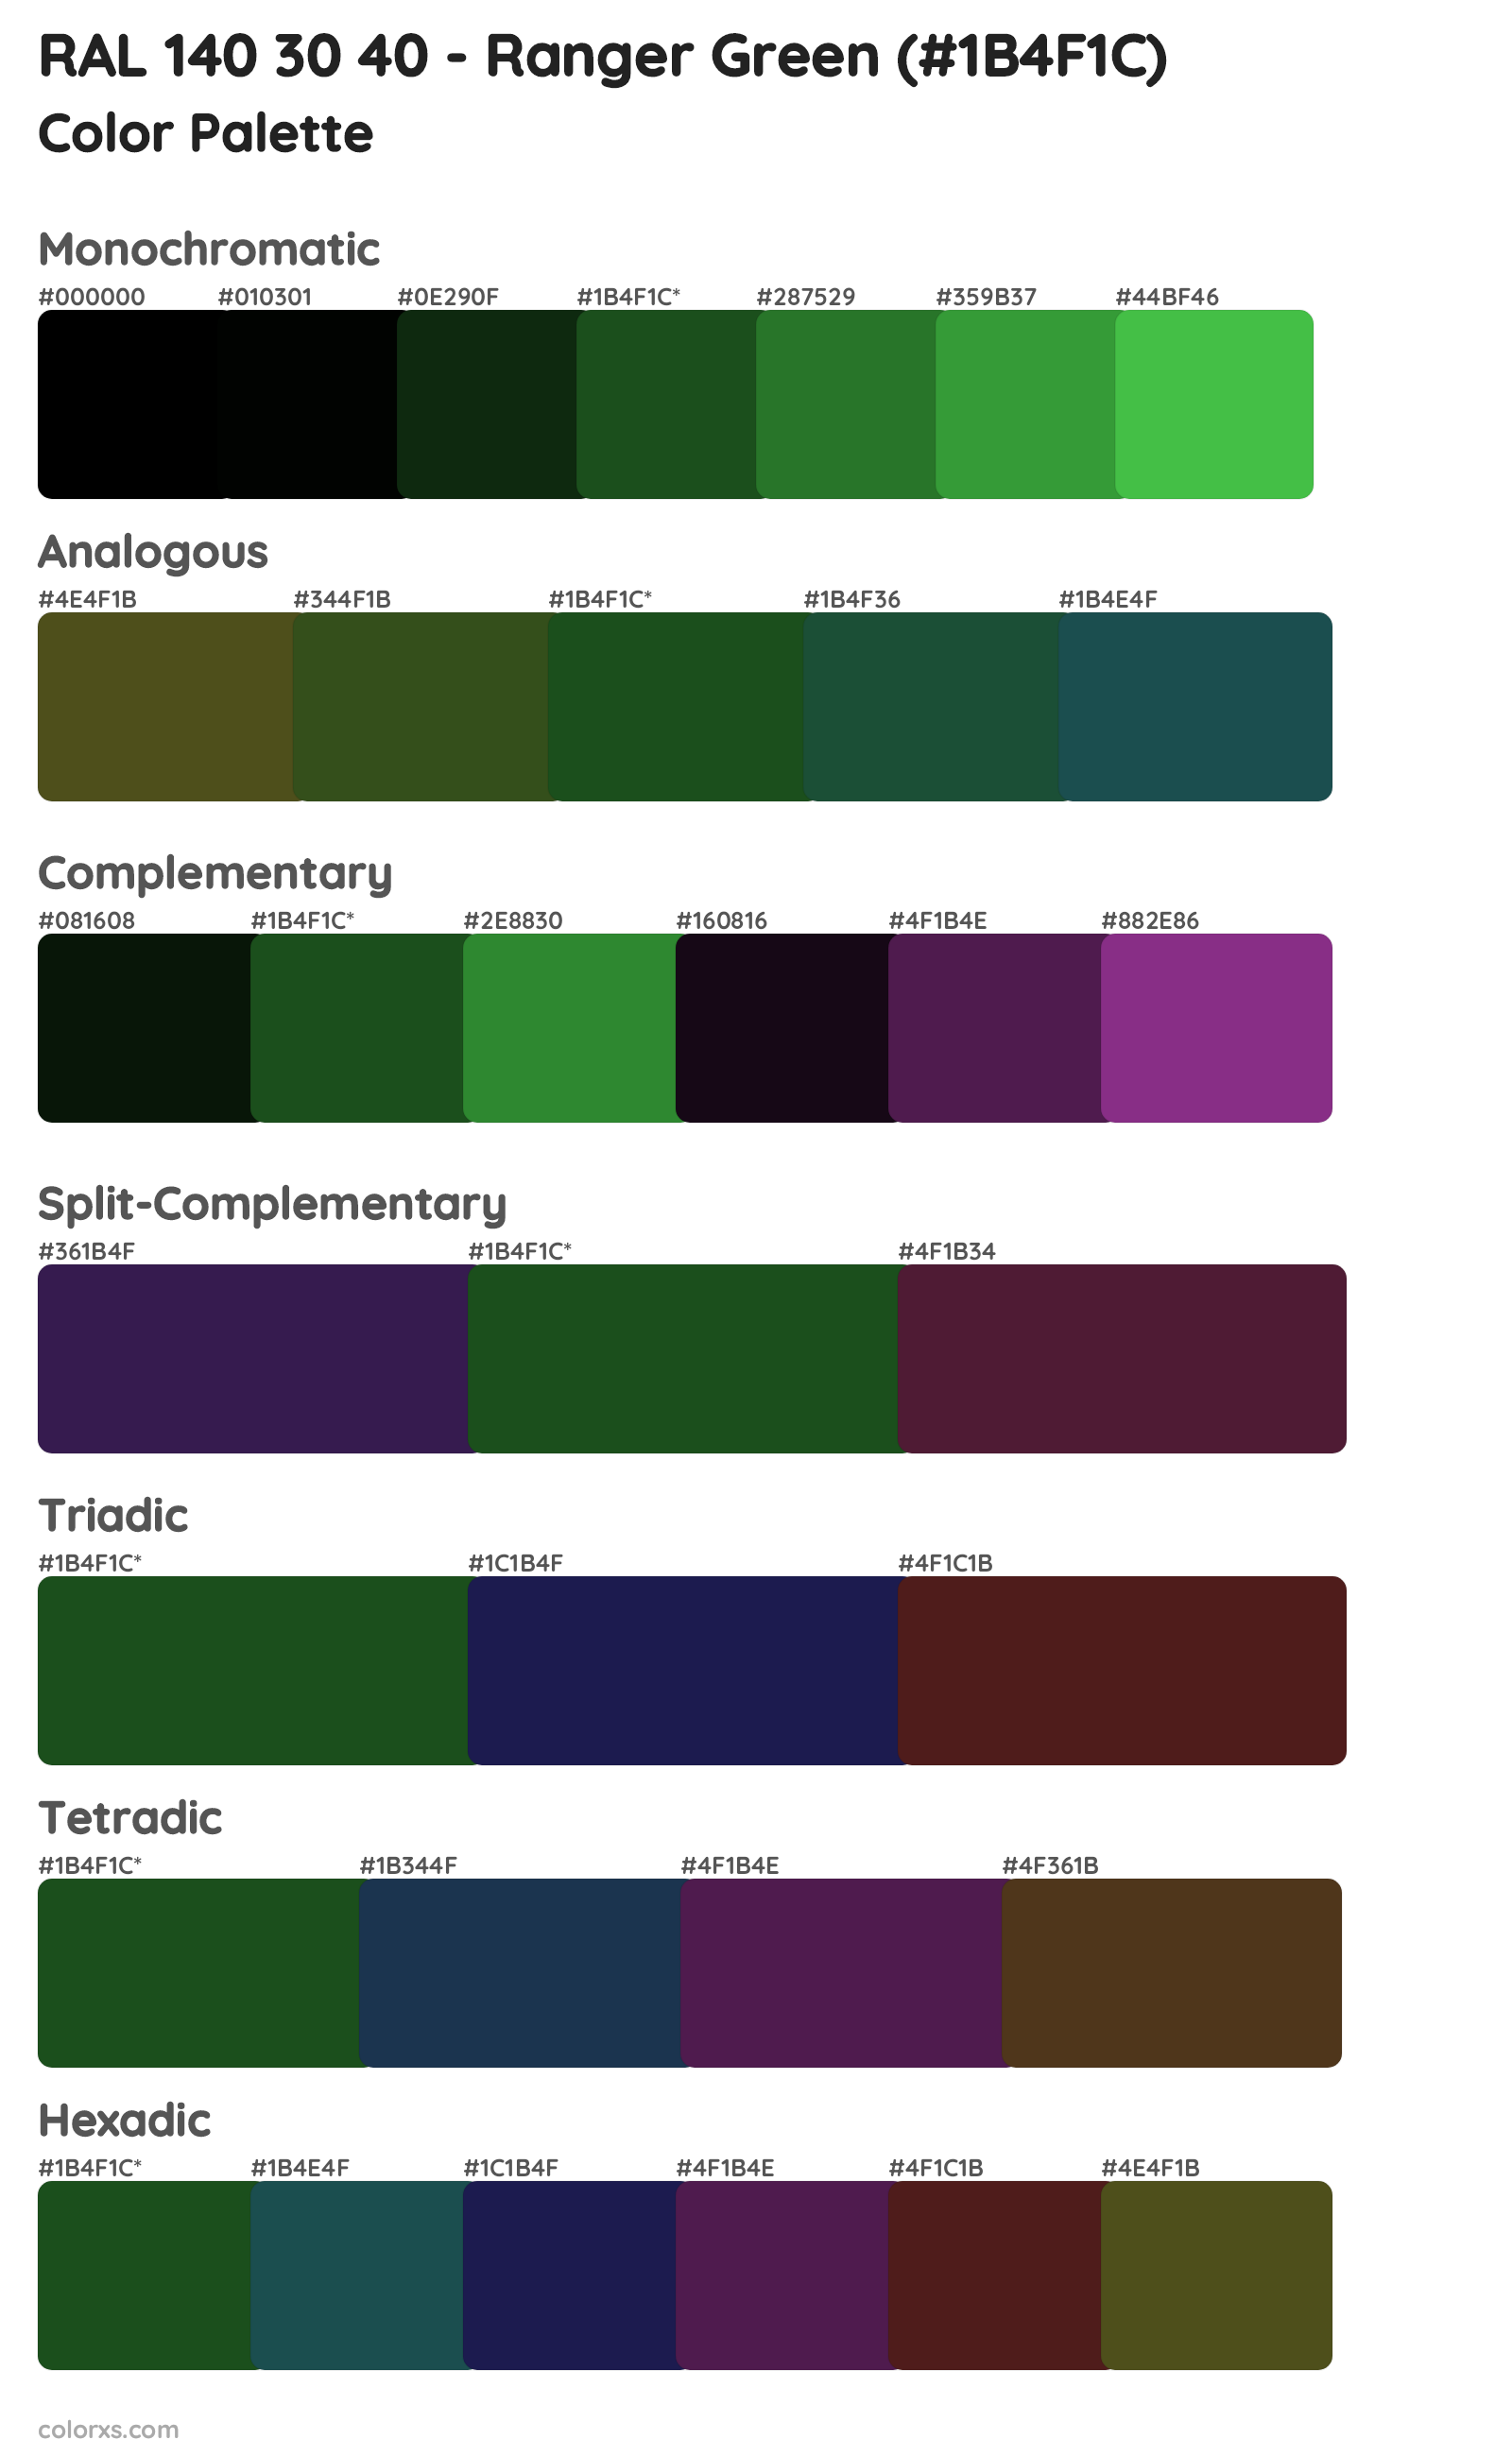 RAL 140 30 40 - Ranger Green Color Scheme Palettes